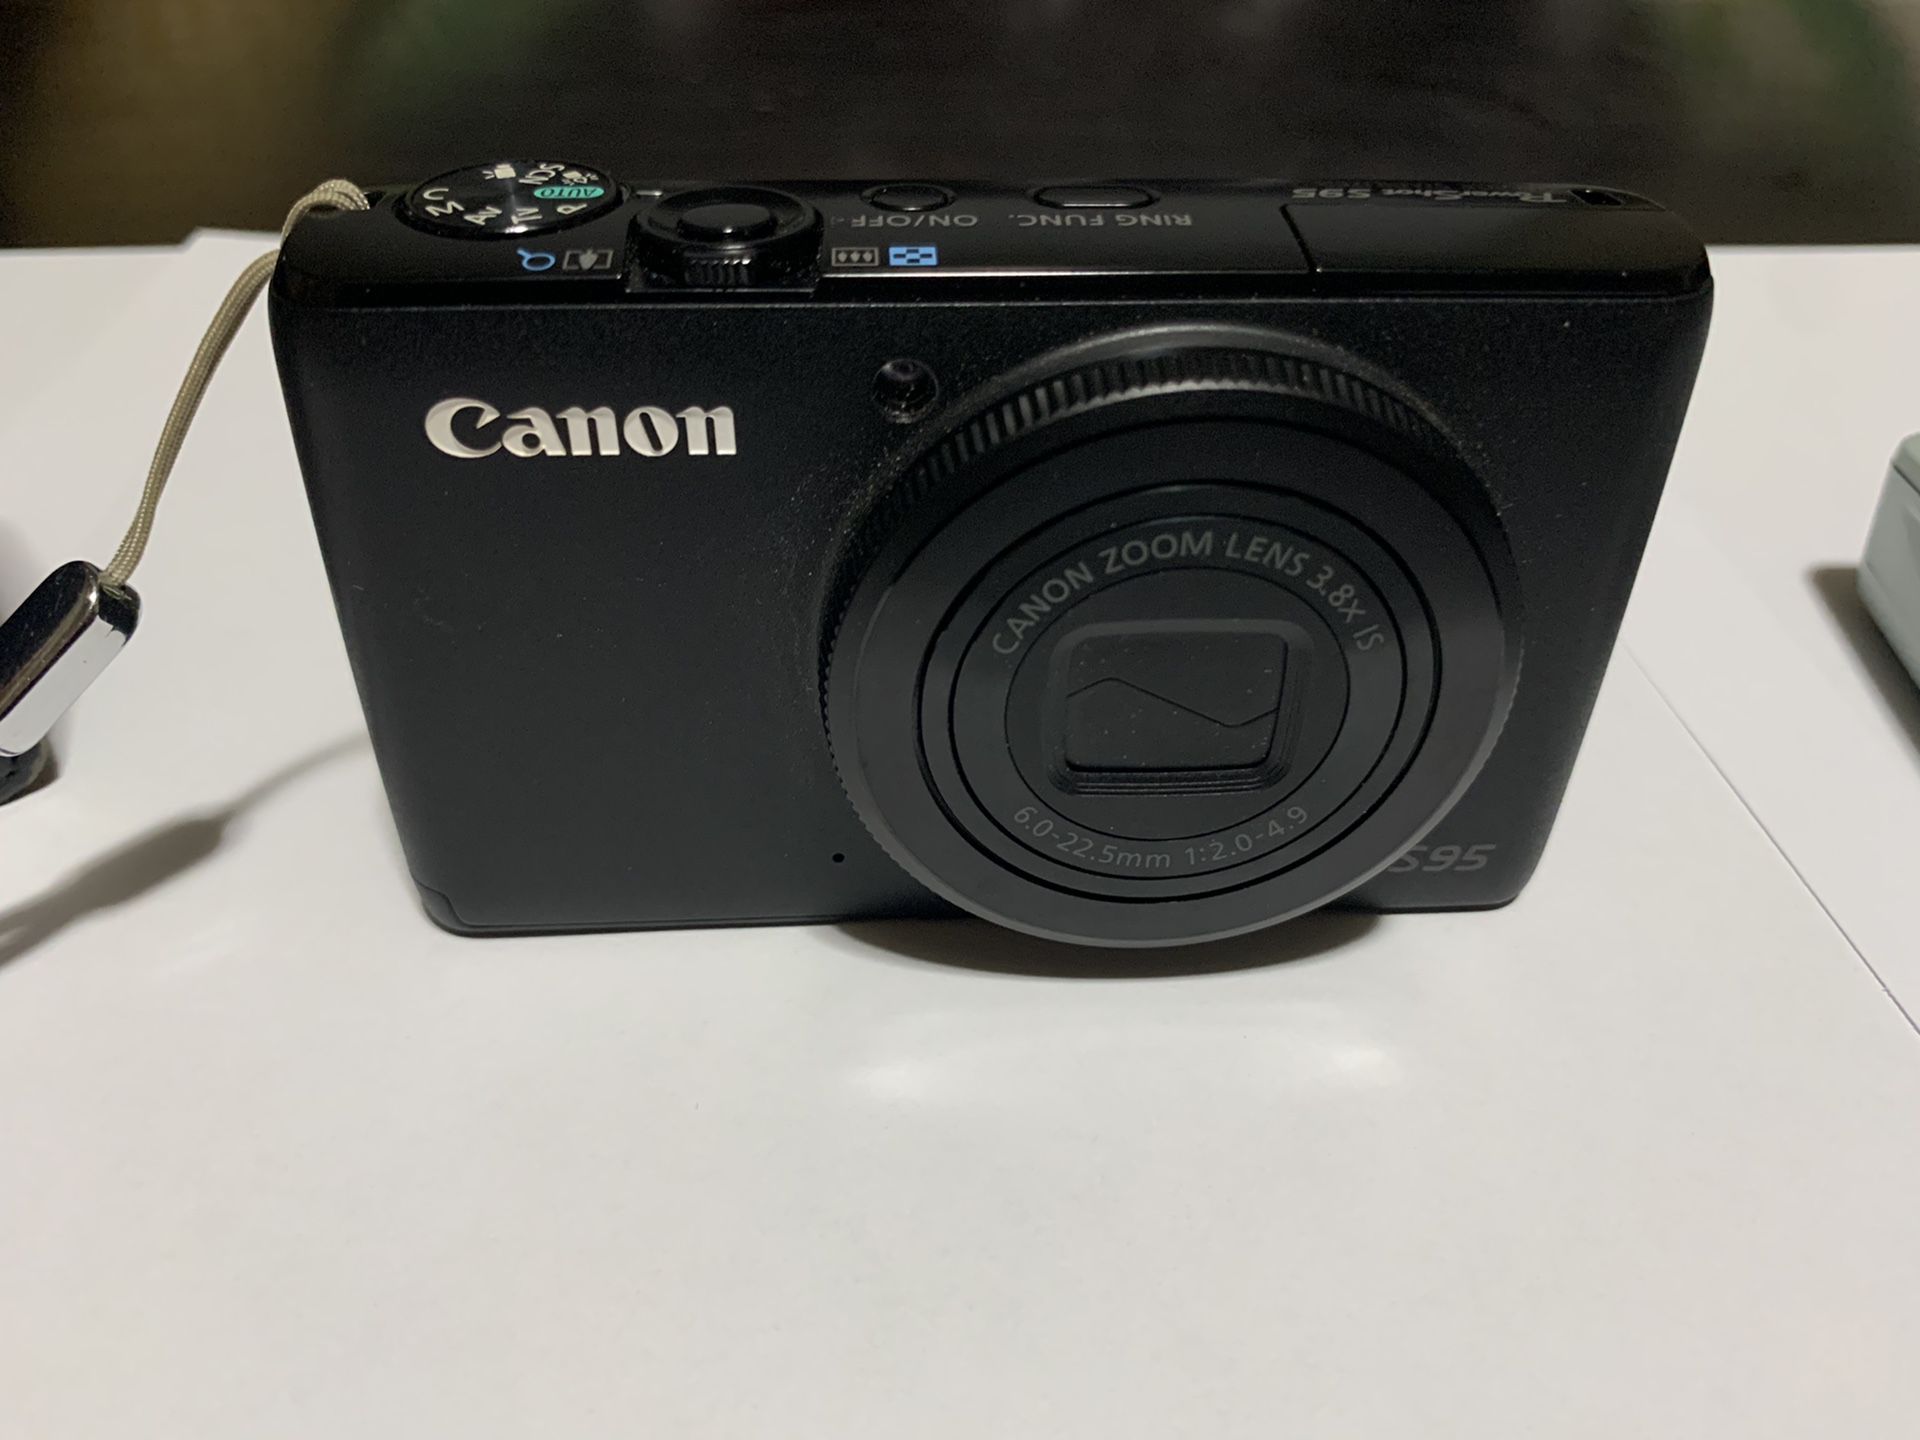 Canon Powershot S95 digital camera